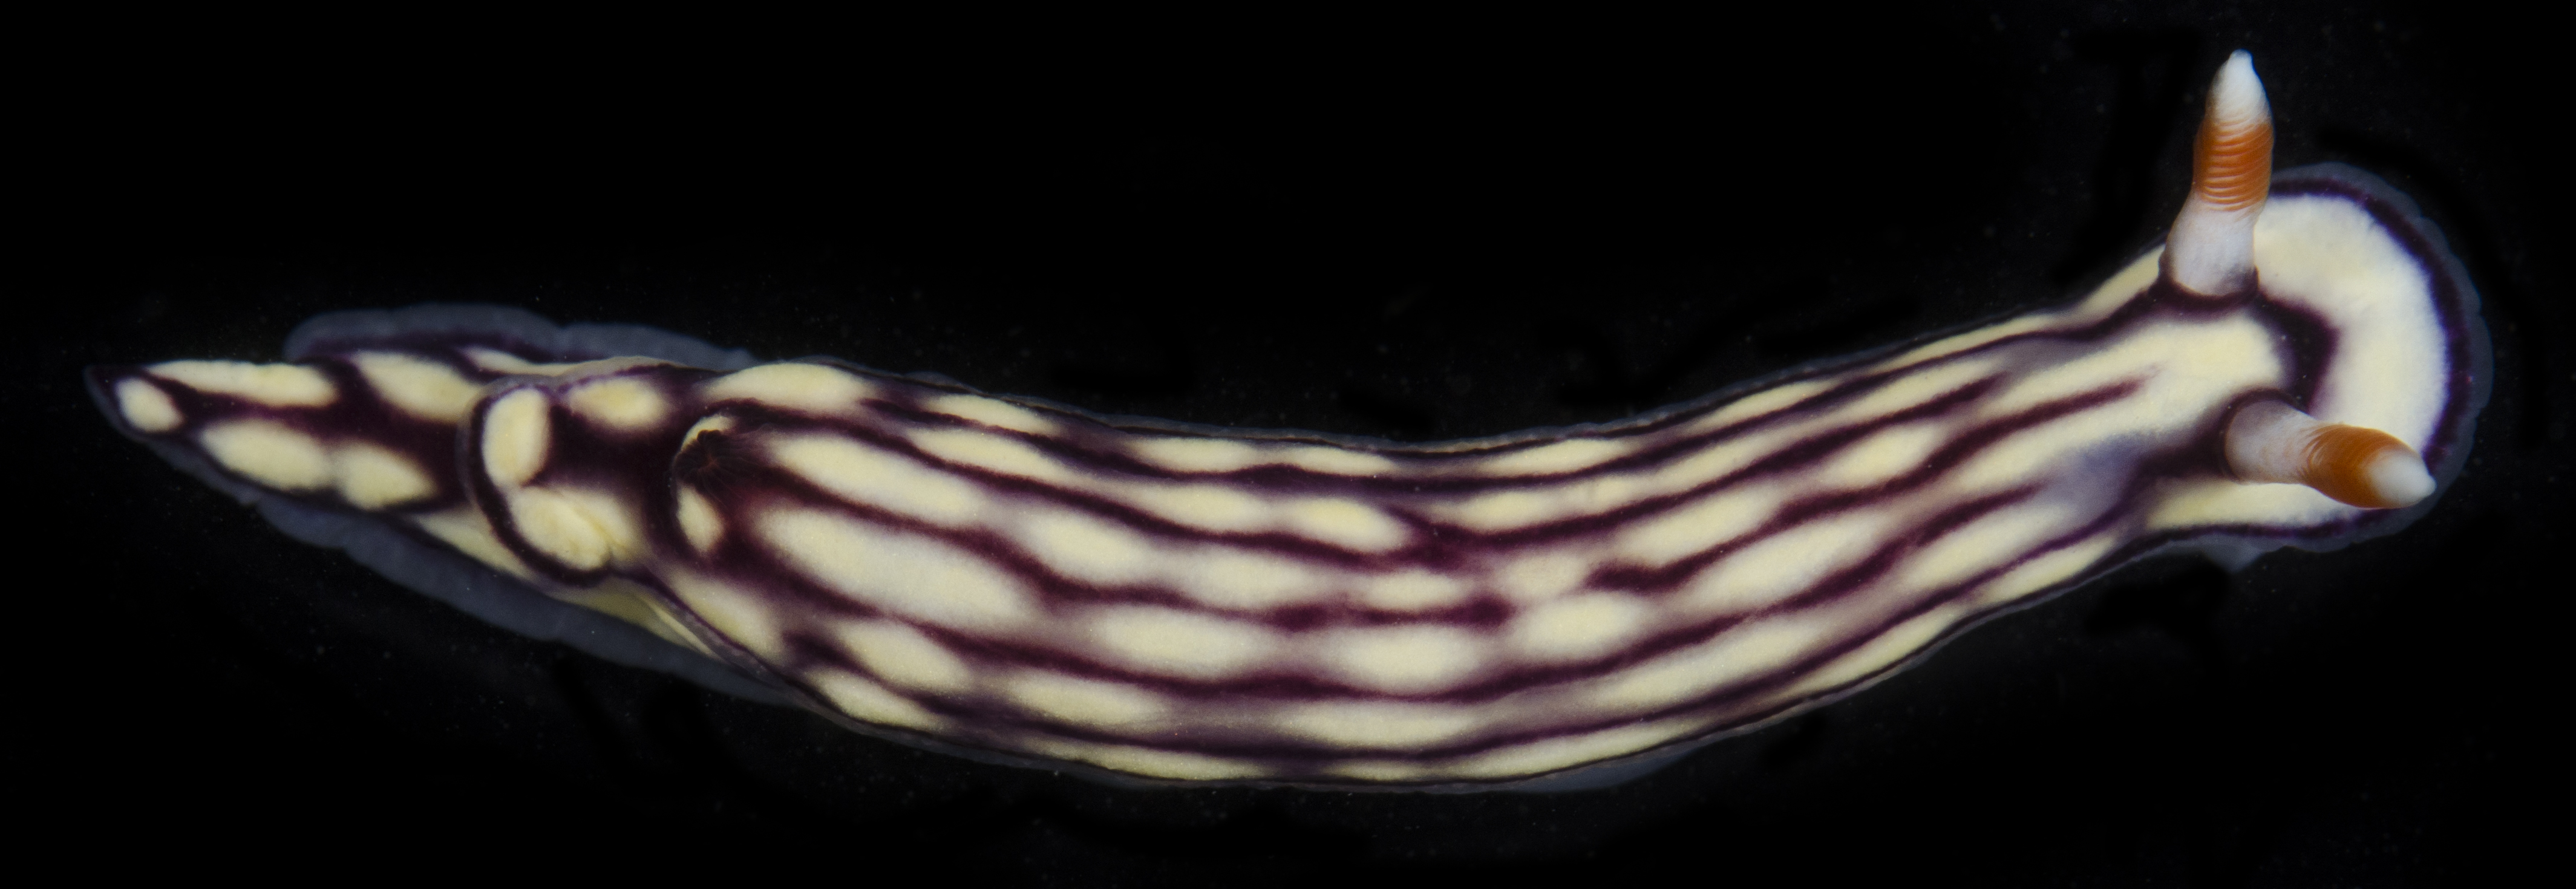 Hypselodoris whitei image